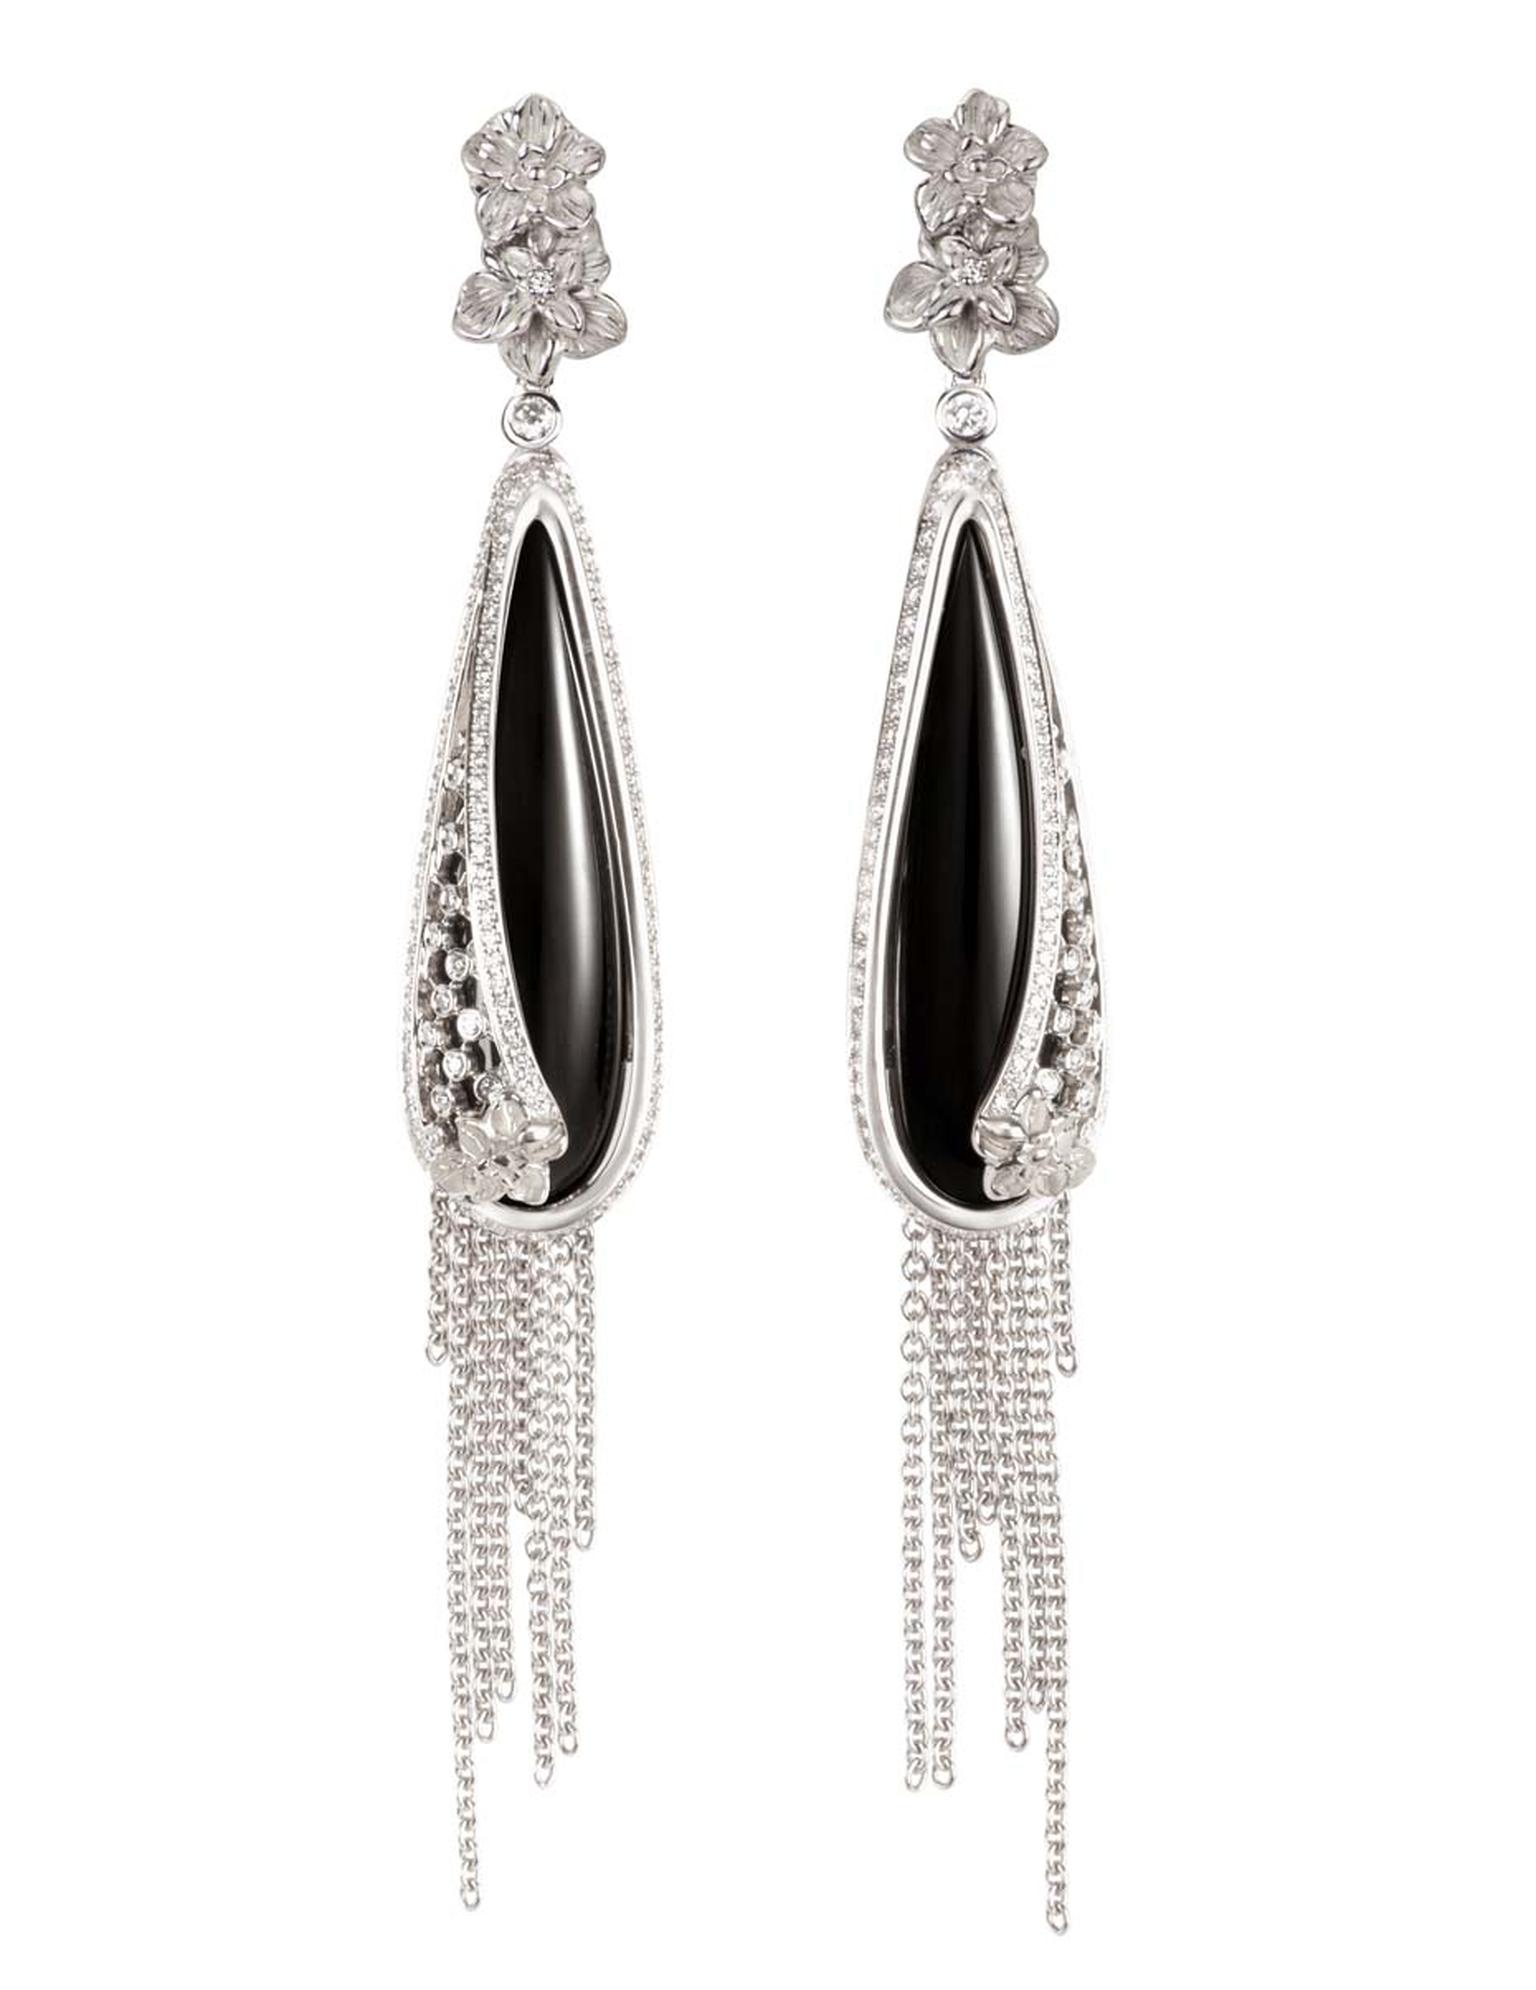 Carrera y Carrera Sierpes medium earrings in white gold, onyx and diamonds.